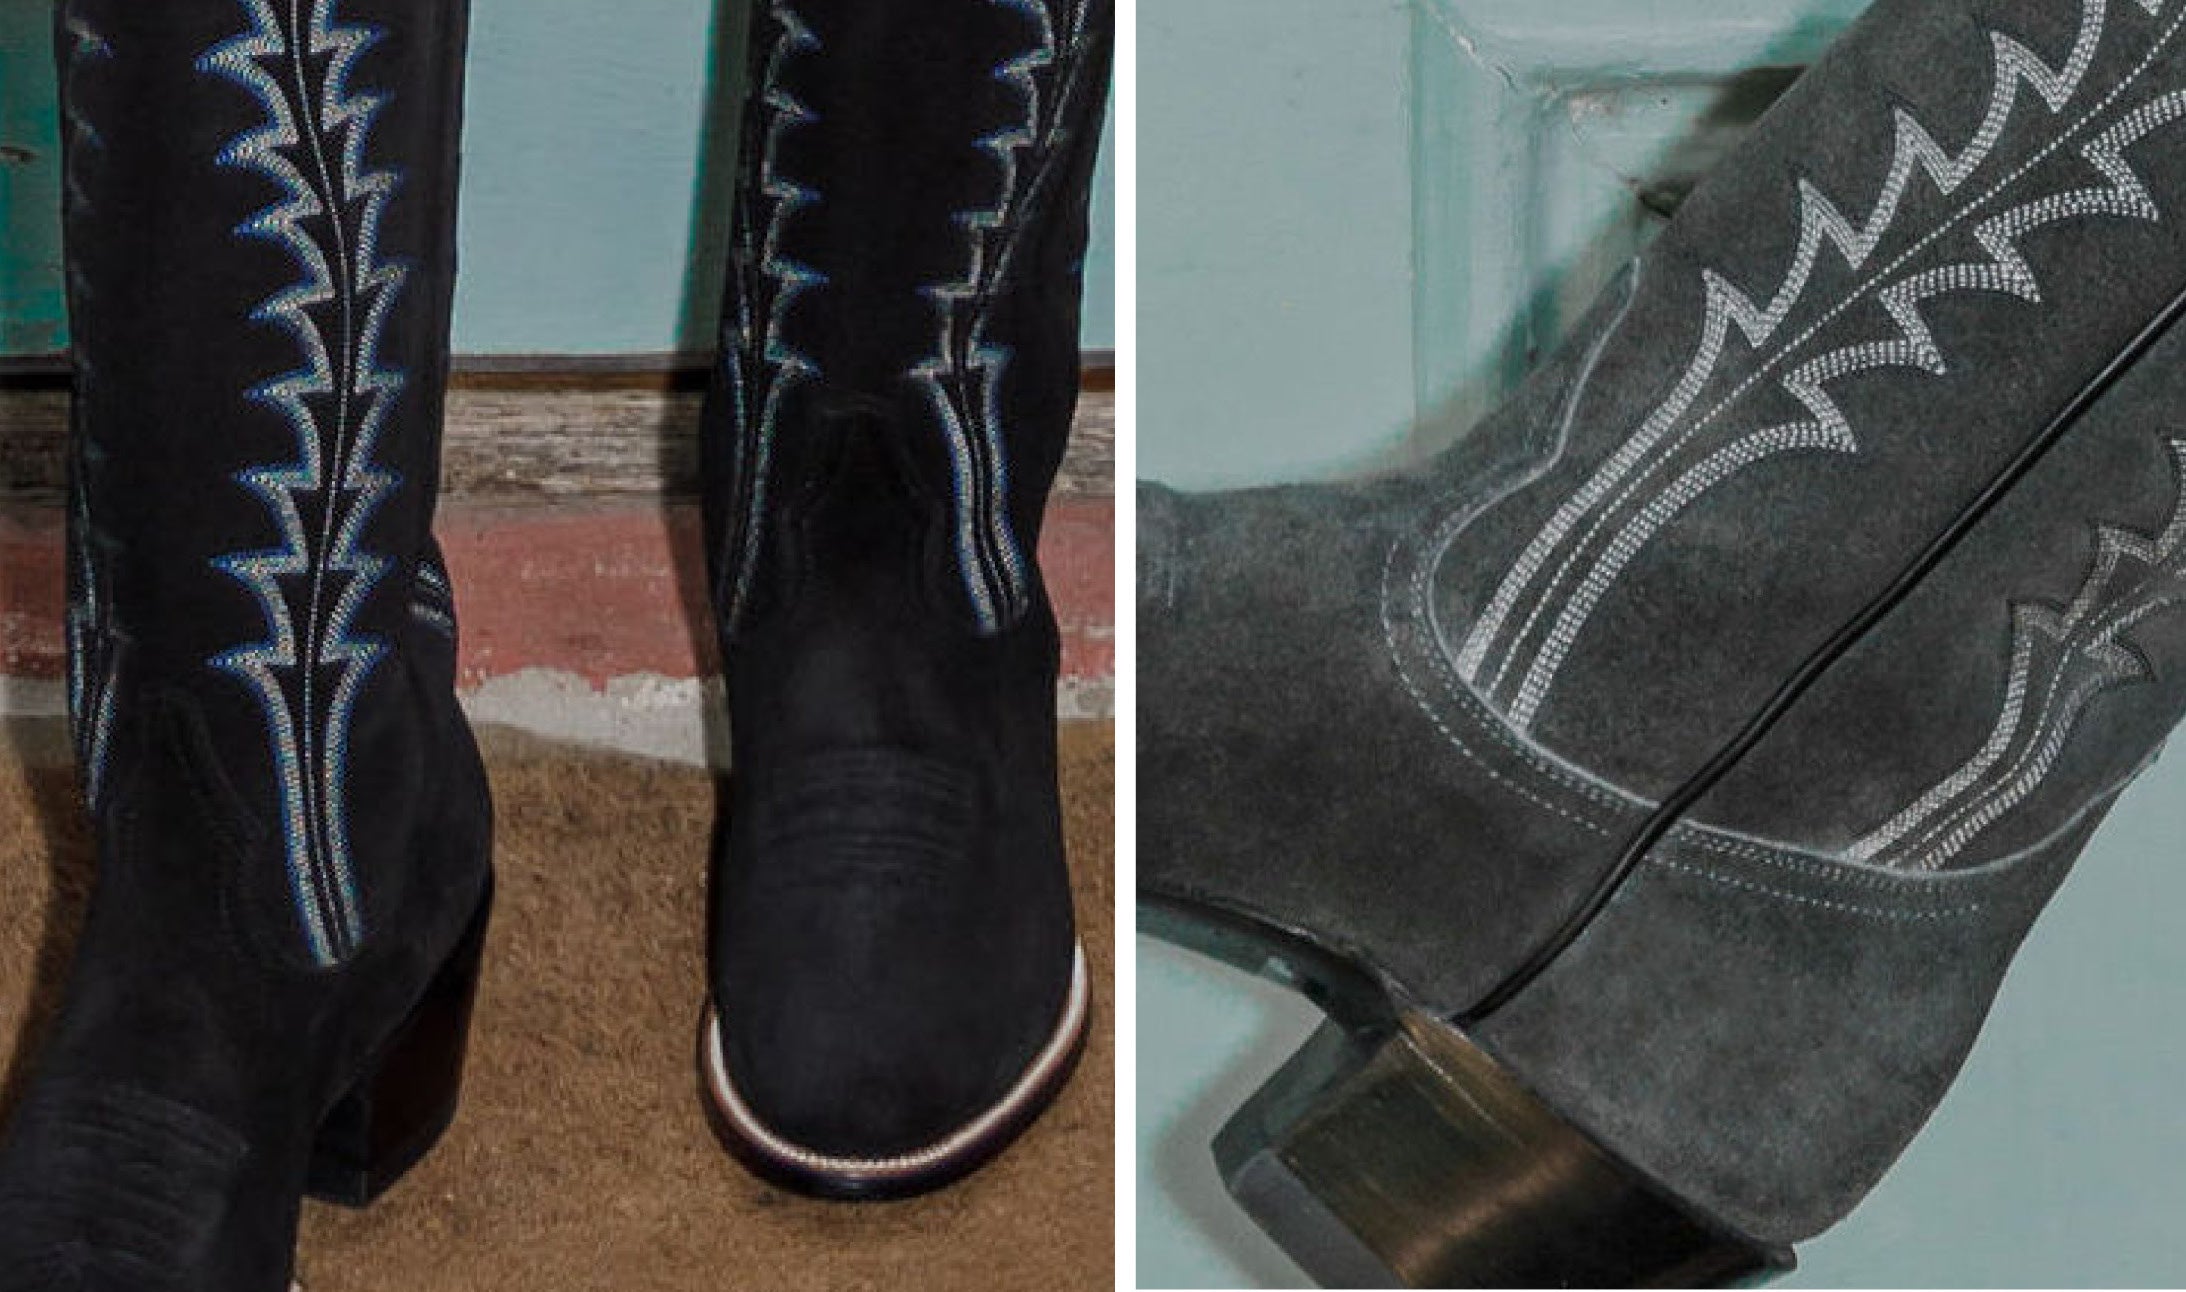 CITY Boots black & grey suede cowboy boots